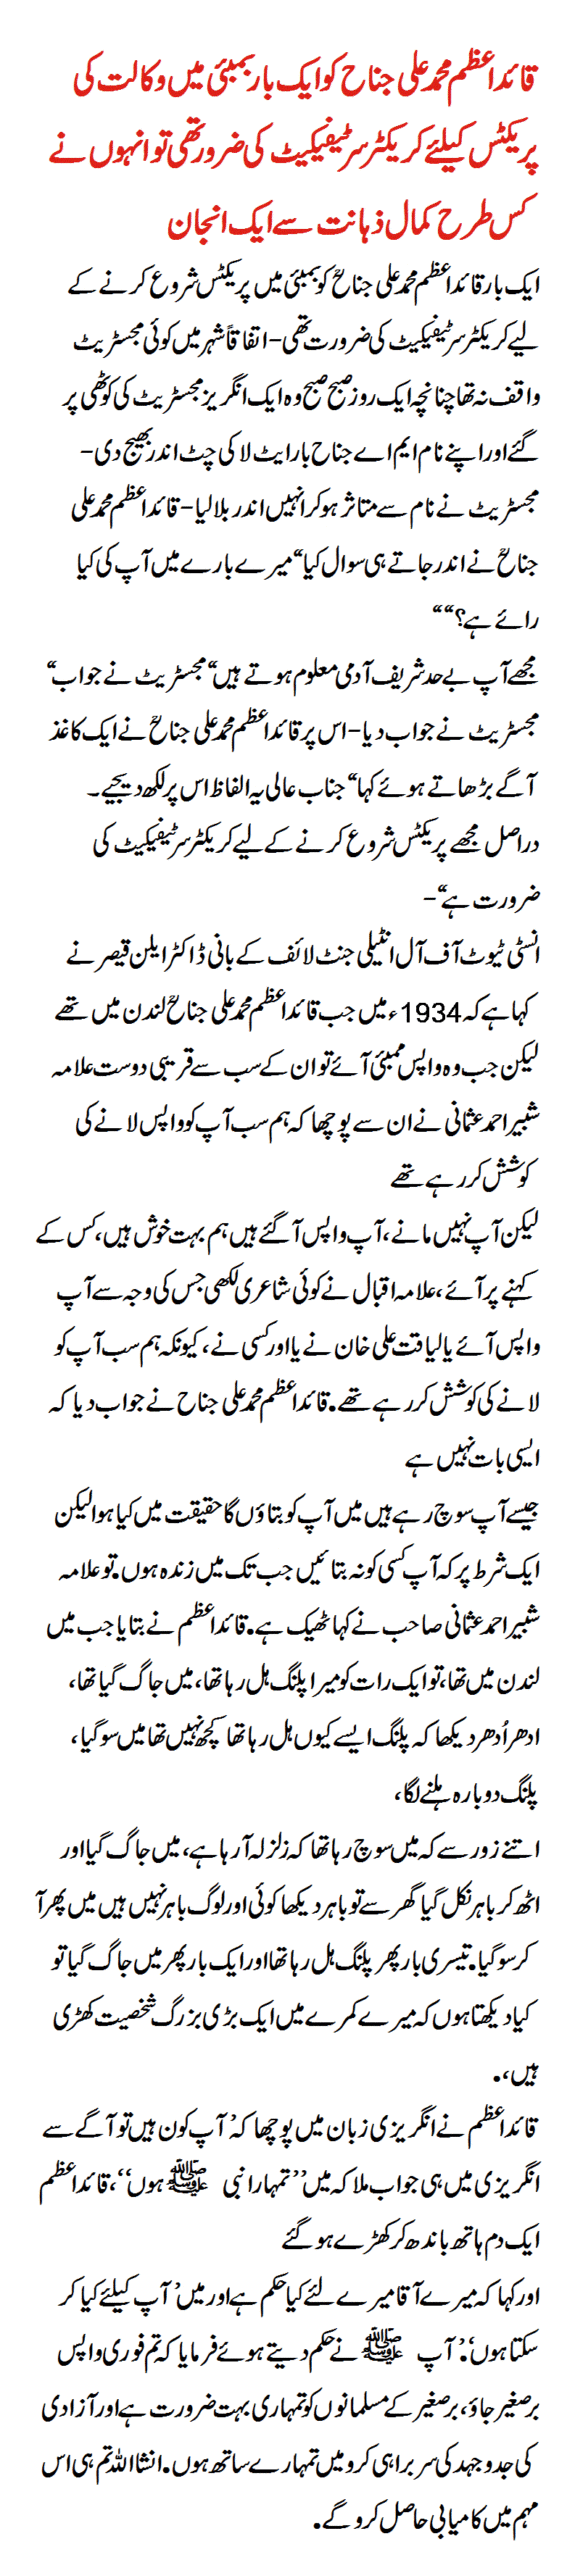 The genius of Quaid-e-Azam 